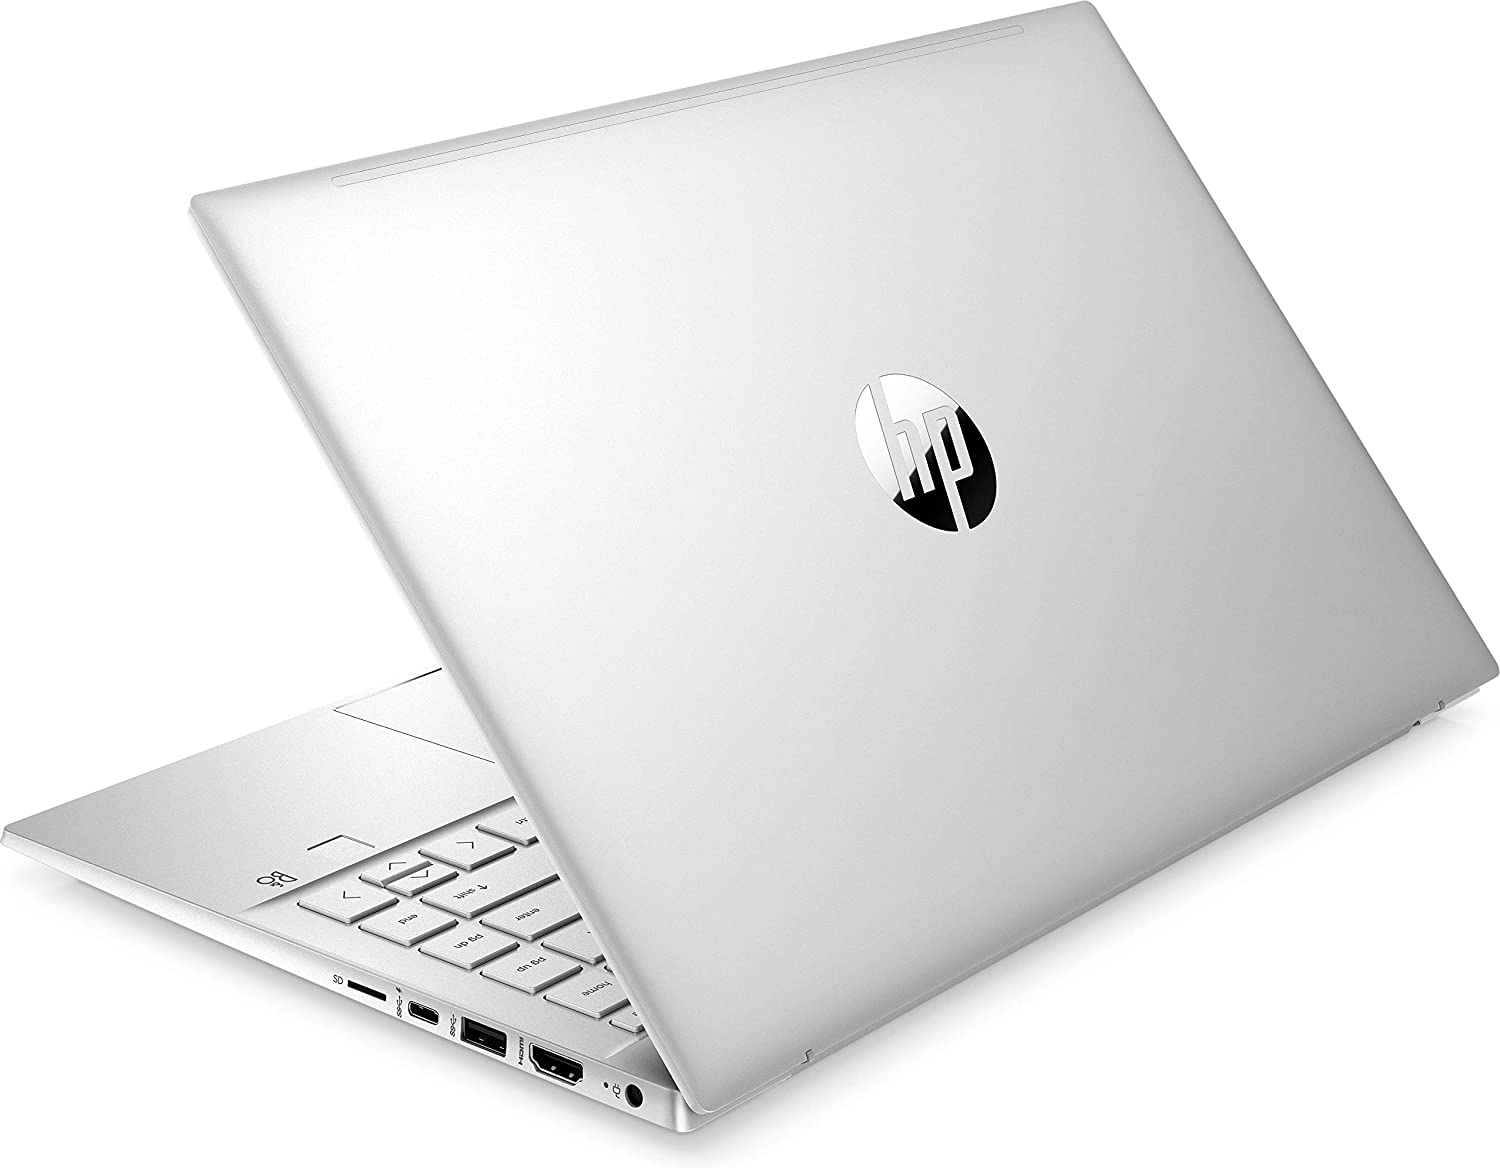 HP 14-dv0020ns laptop image